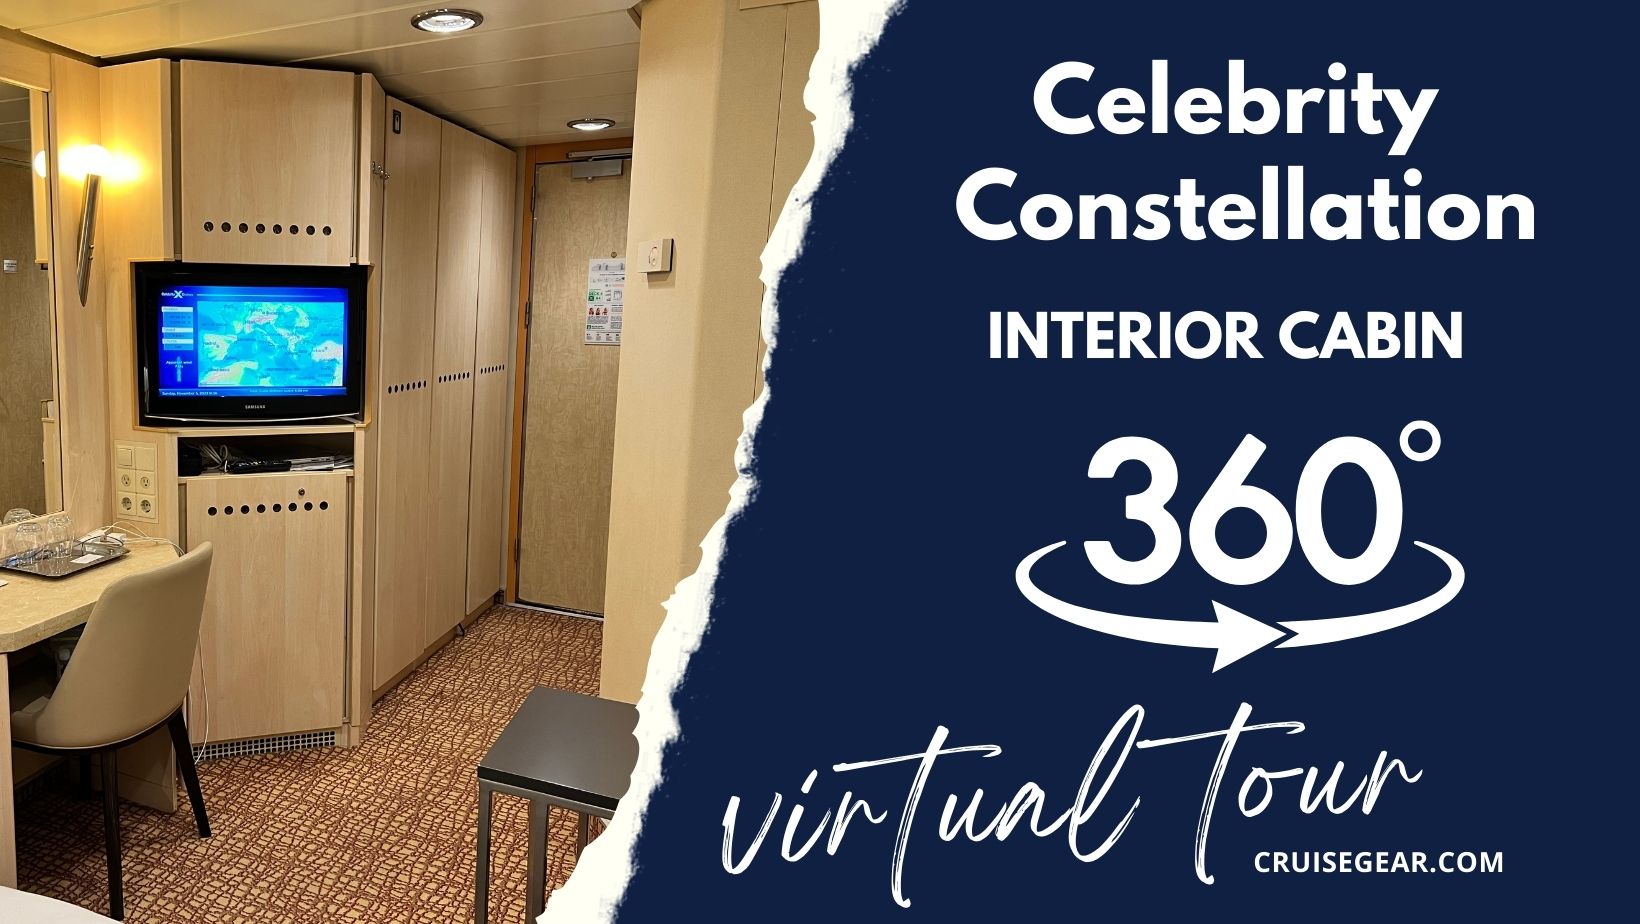 celebrity constellation interior cabin 360 pictures